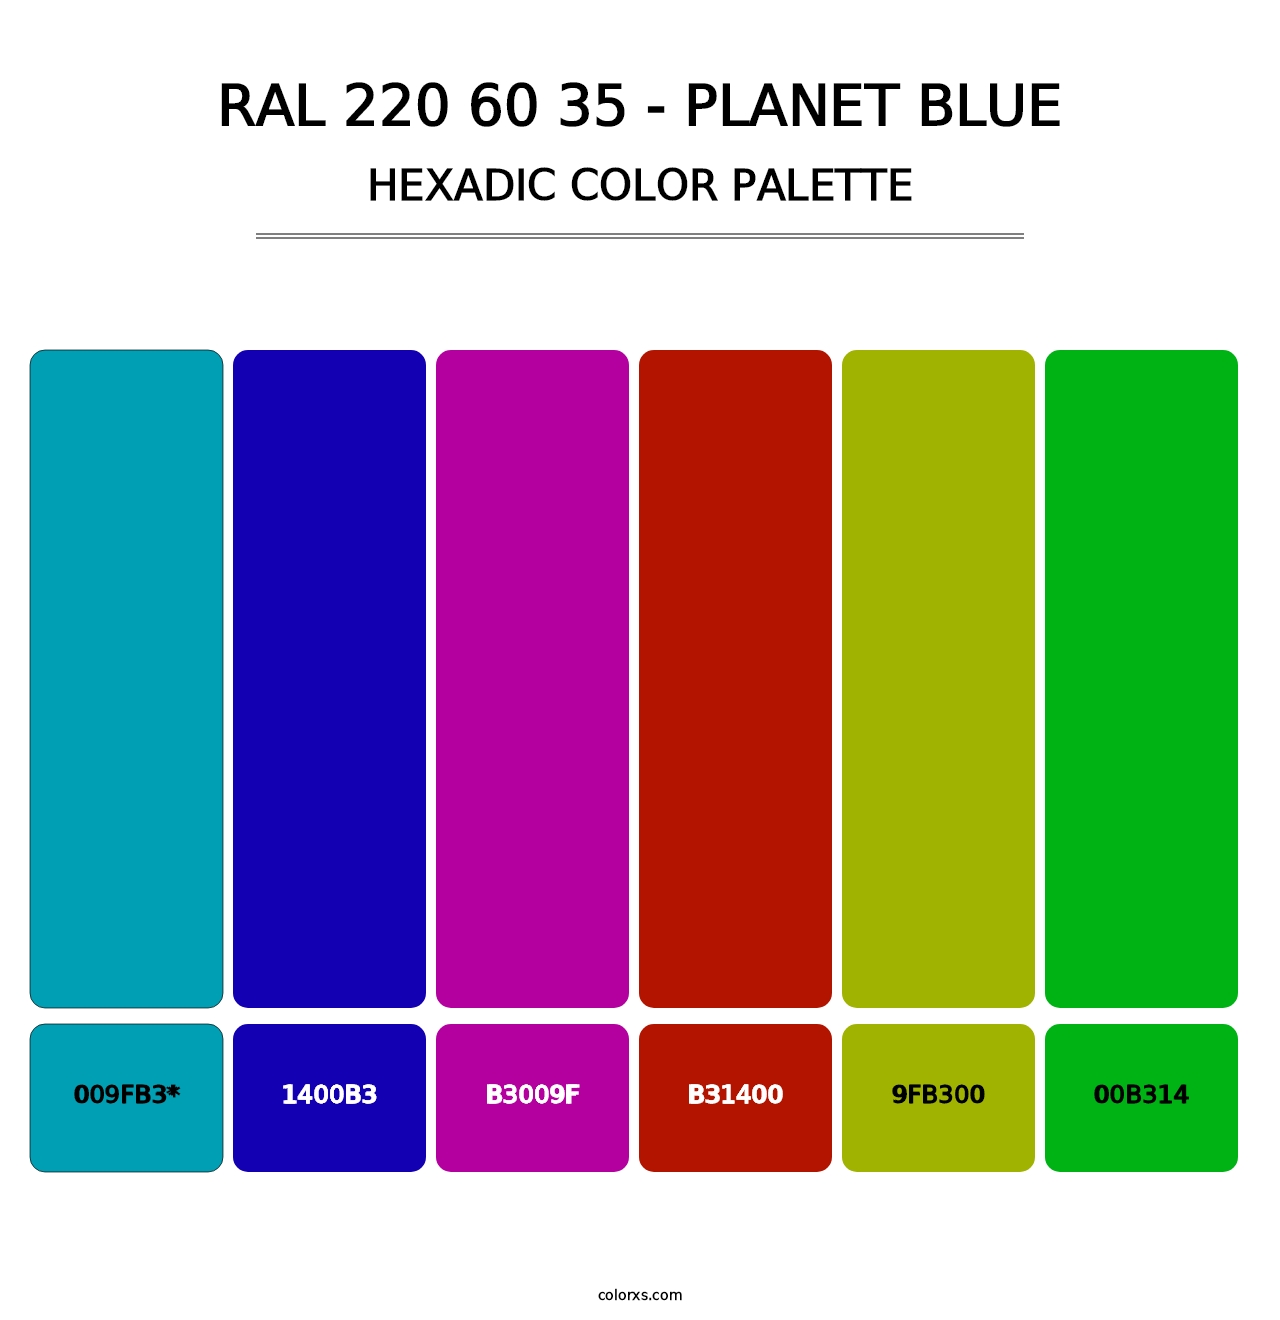 RAL 220 60 35 - Planet Blue - Hexadic Color Palette